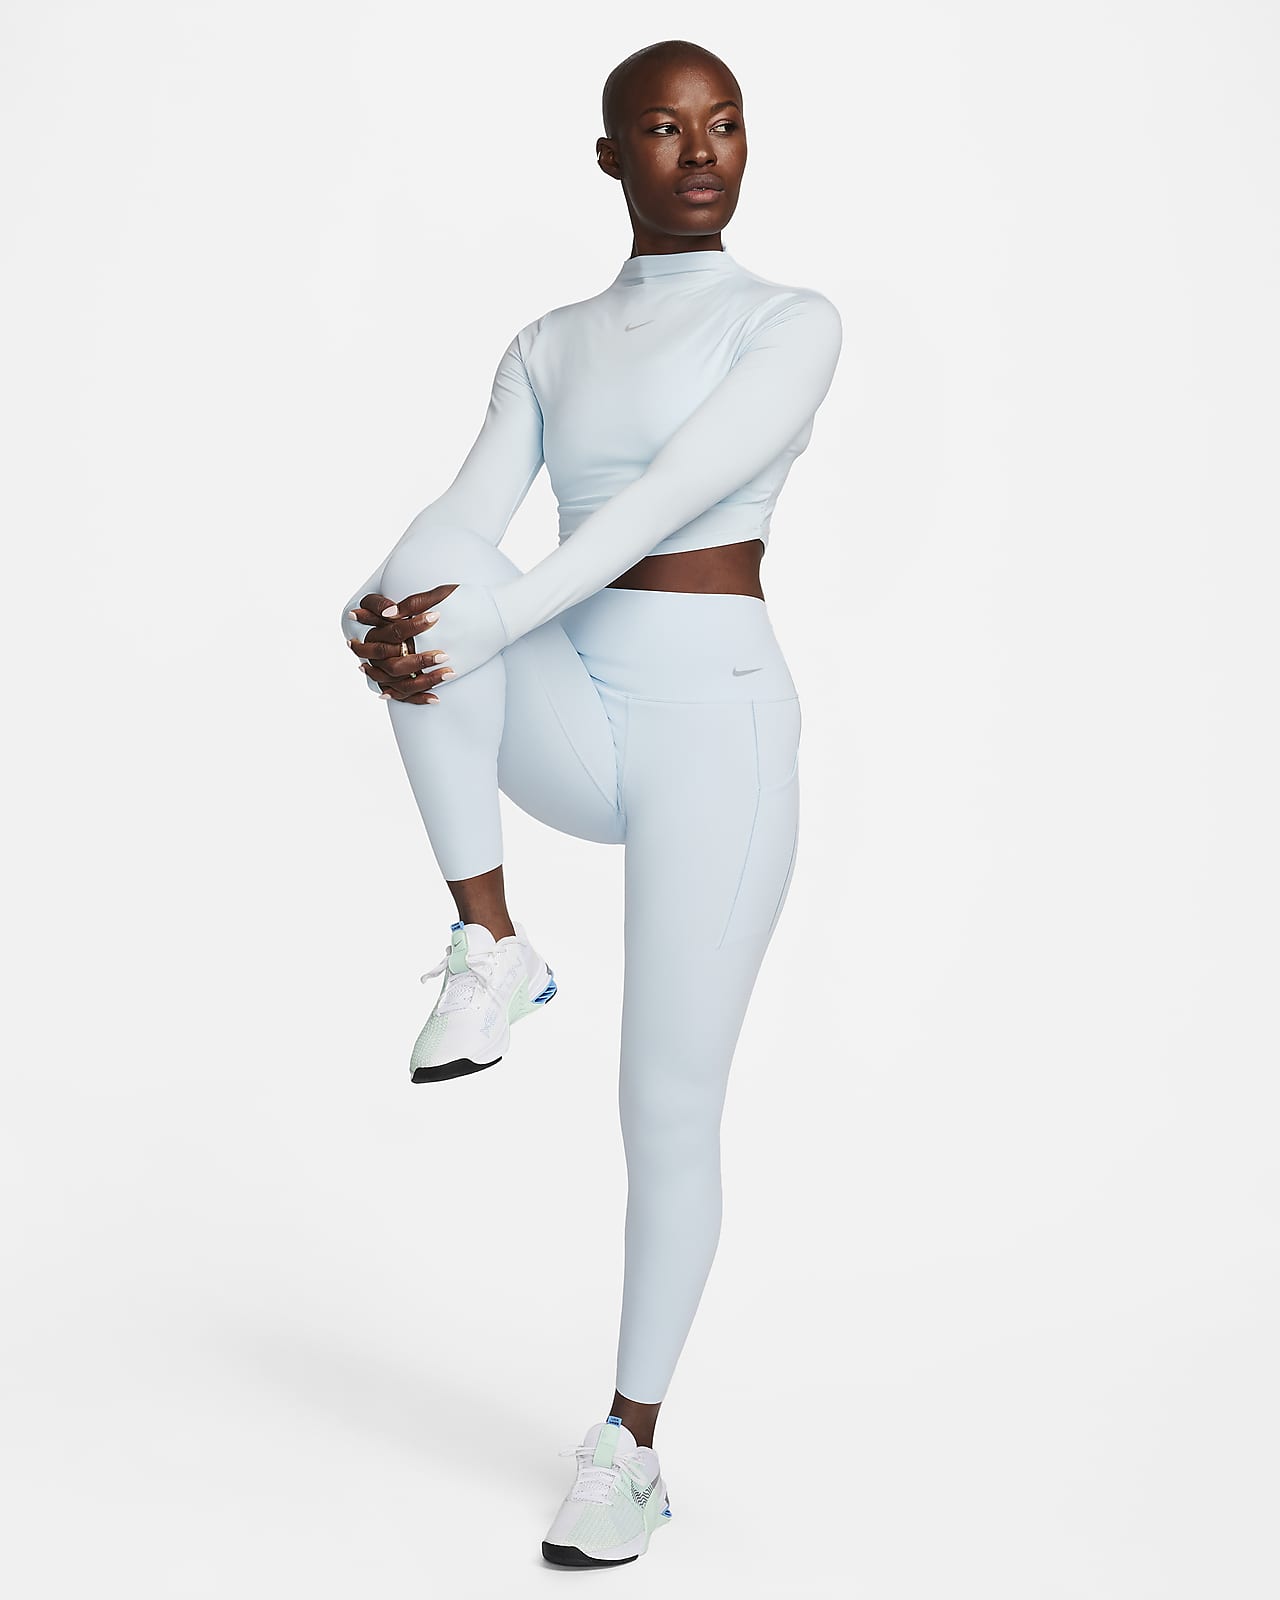 Nike Dri-FIT One Luxe Women's Long-Sleeve Cropped Top. Nike UK